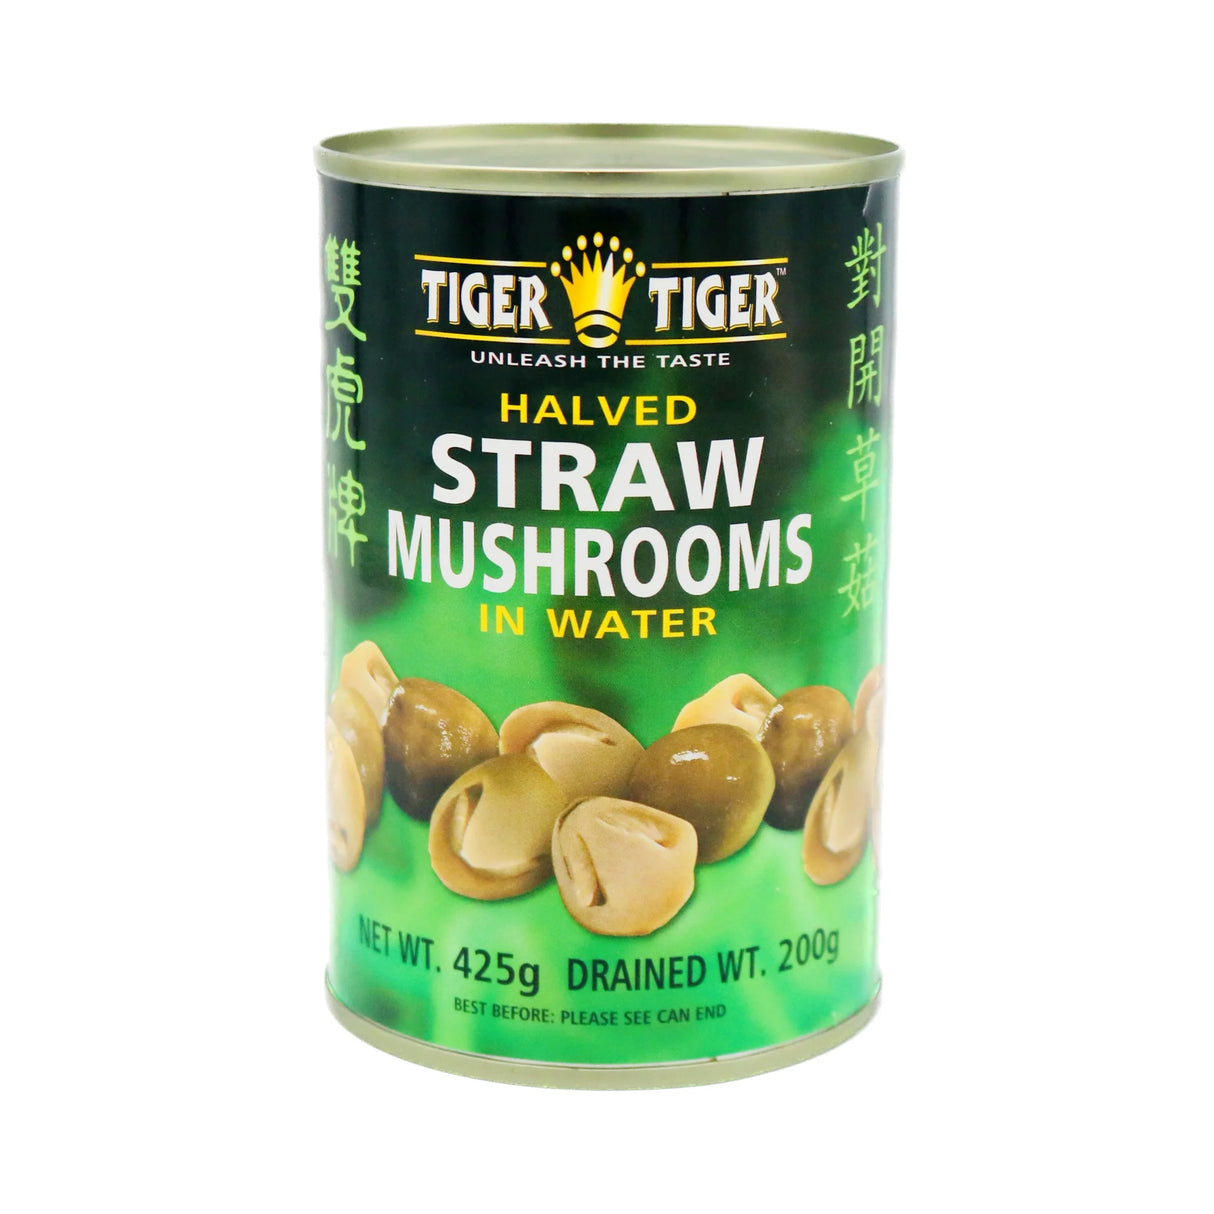 TIGER TIGER Halved Straw Mushrooms In Water 425g